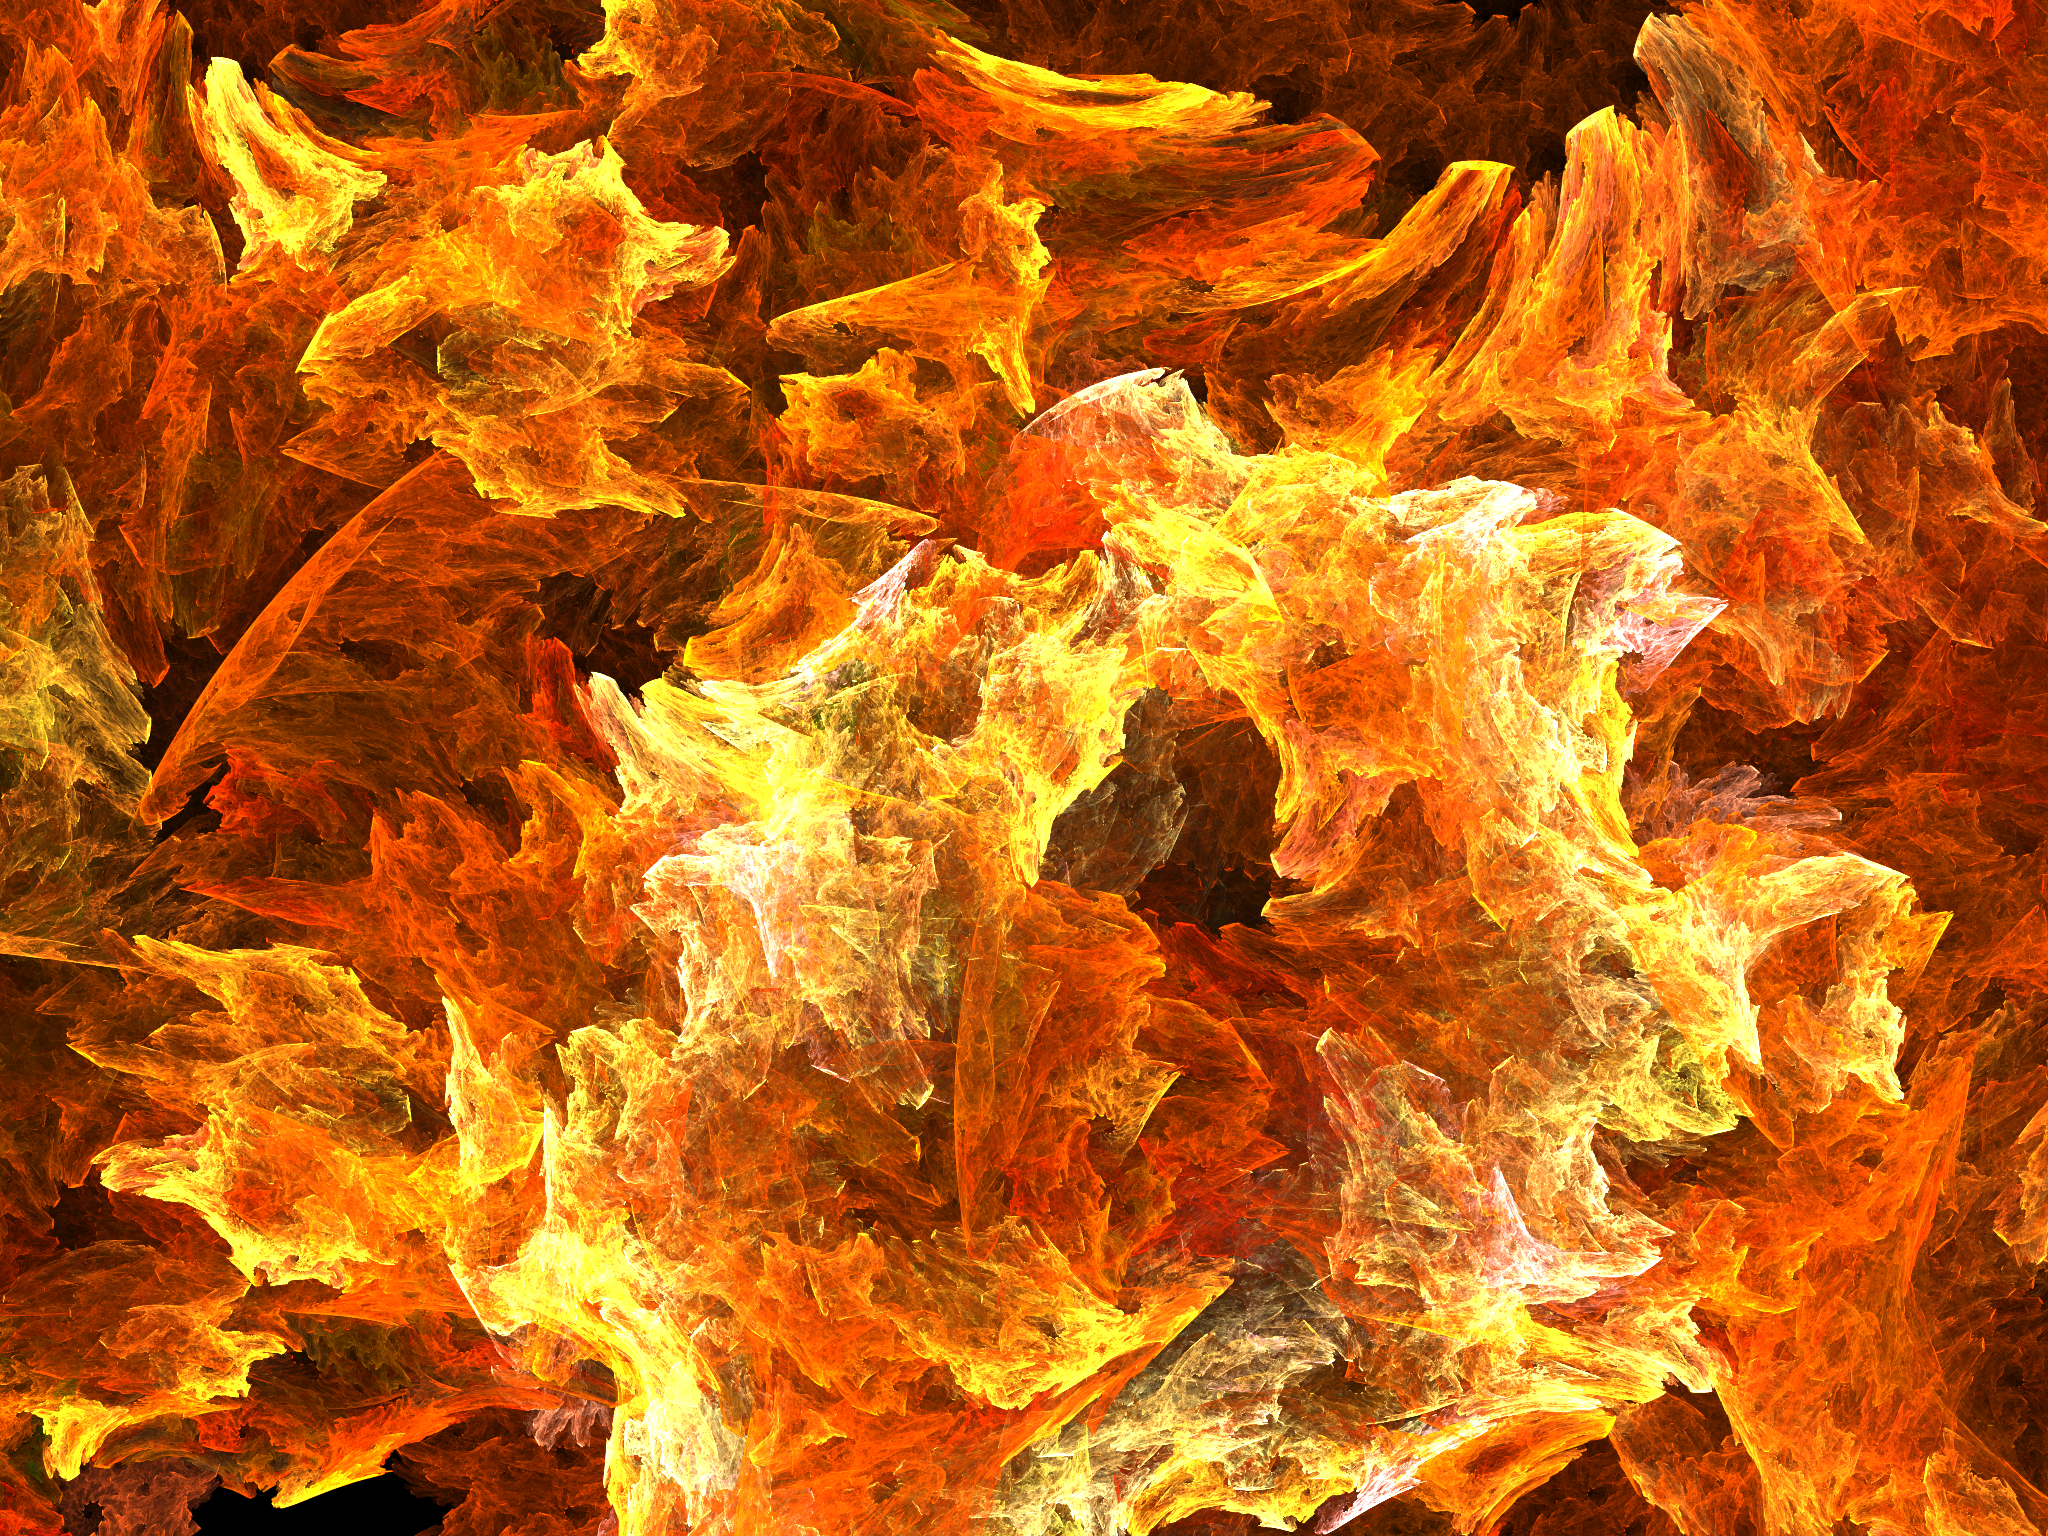 Abstract Apophysis Software Artistic Digital Art Fire Fractal Shapes Orange Color 2048x1536